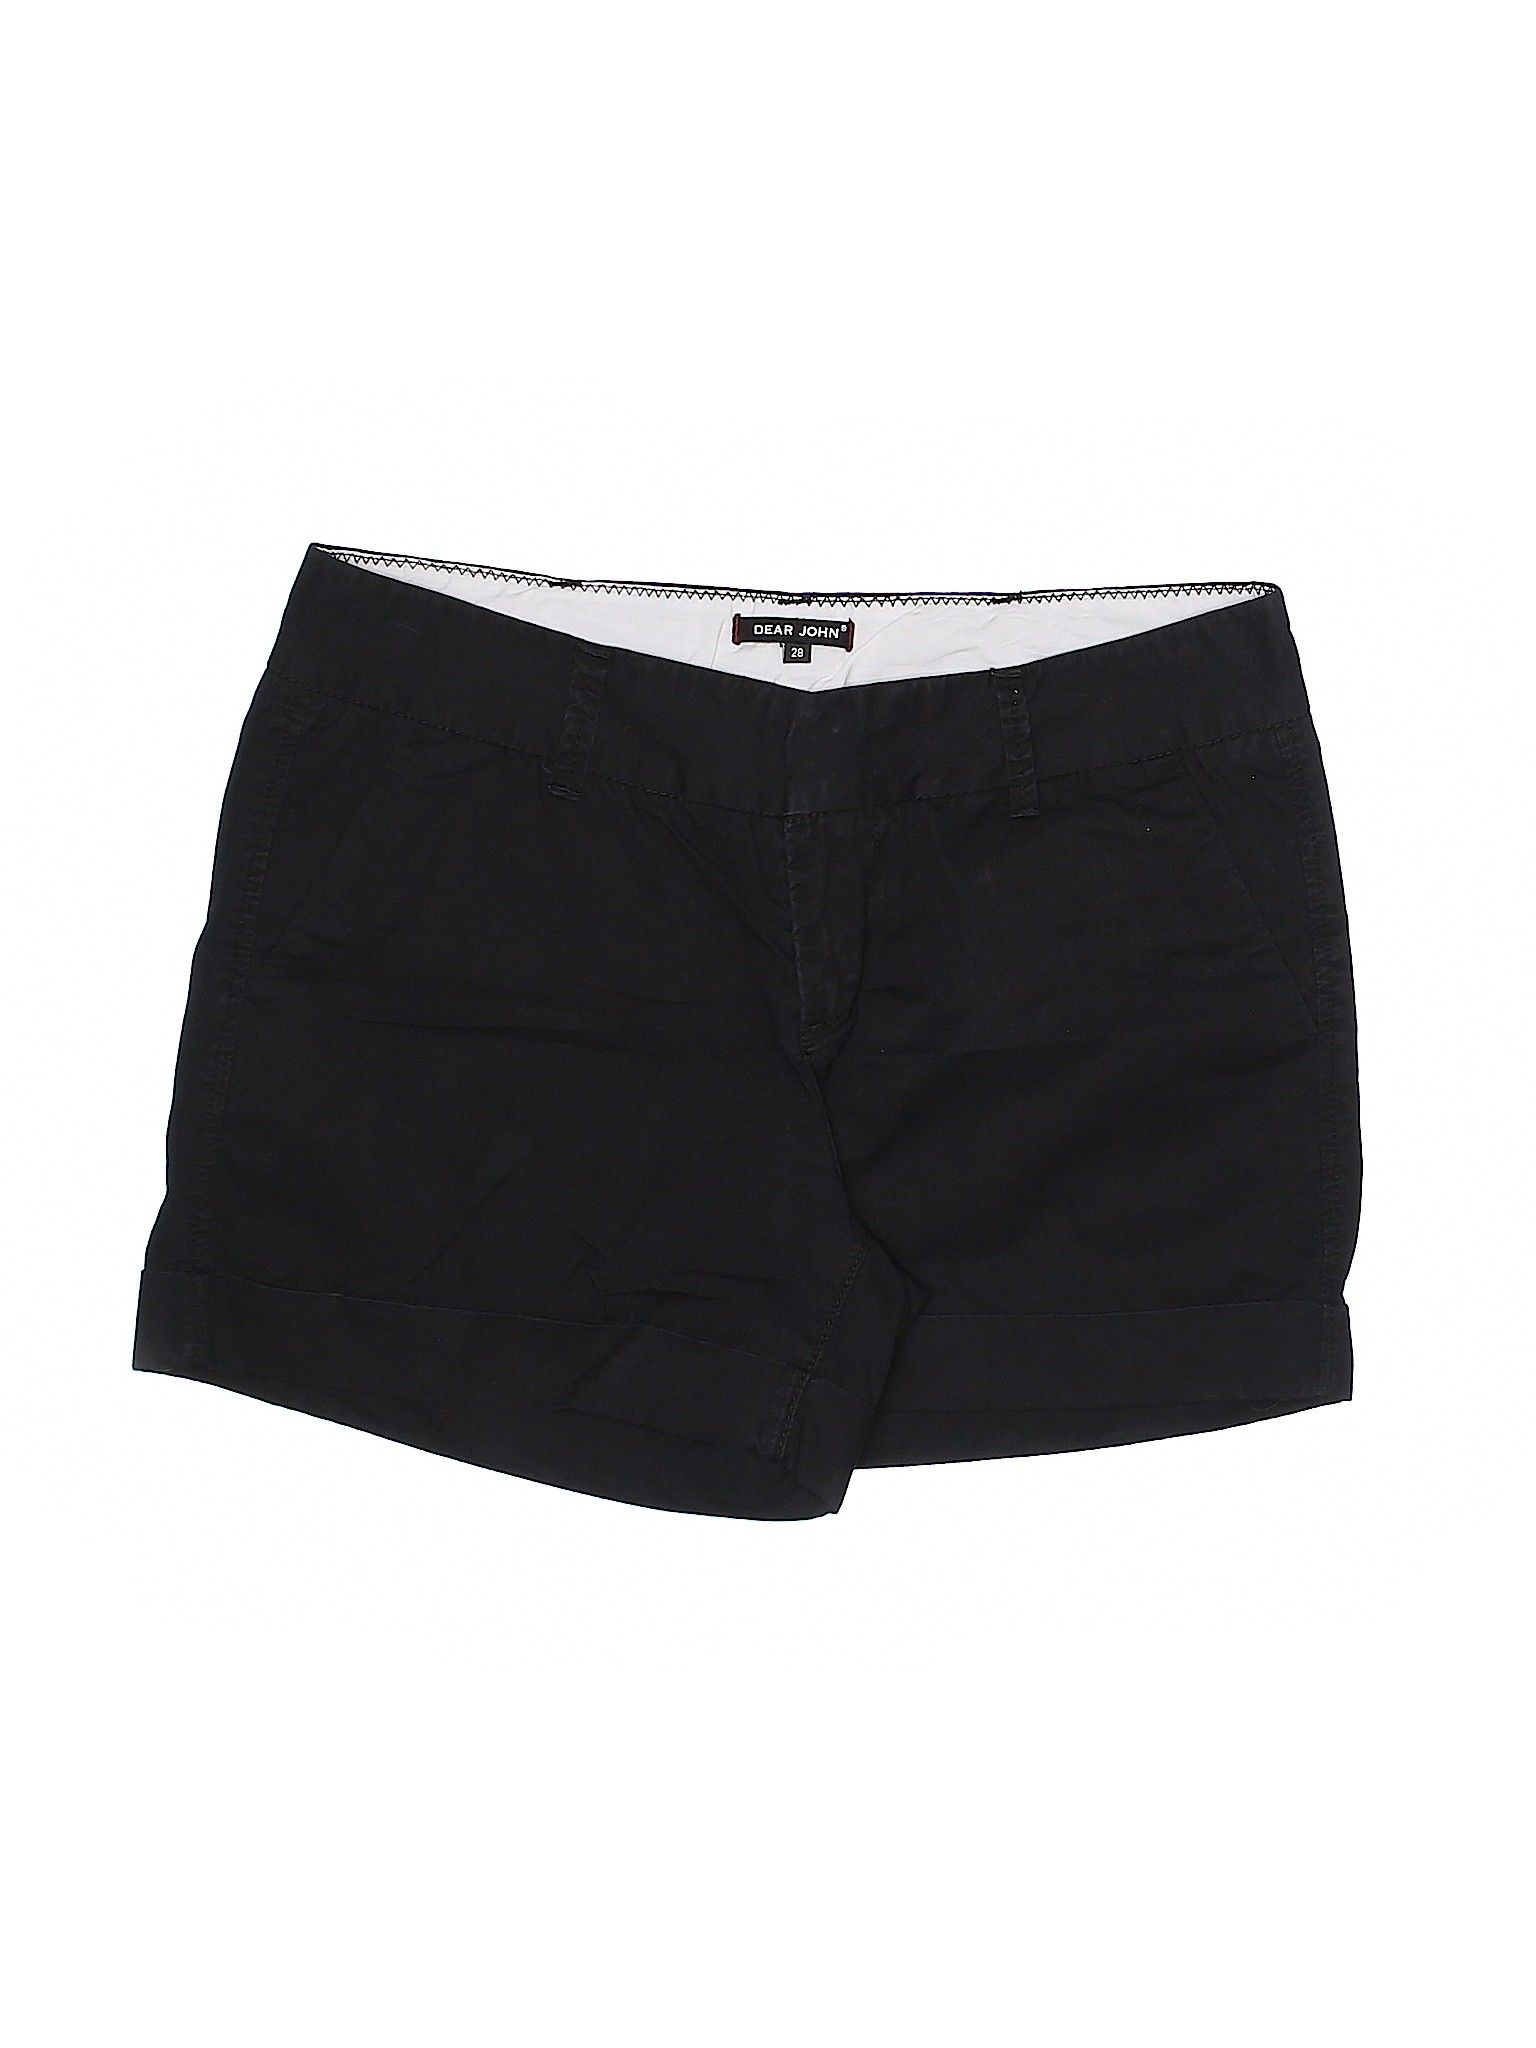 Dear John Khaki Shorts Size 6: Black Women's Bottoms - 45270519 | thredUP